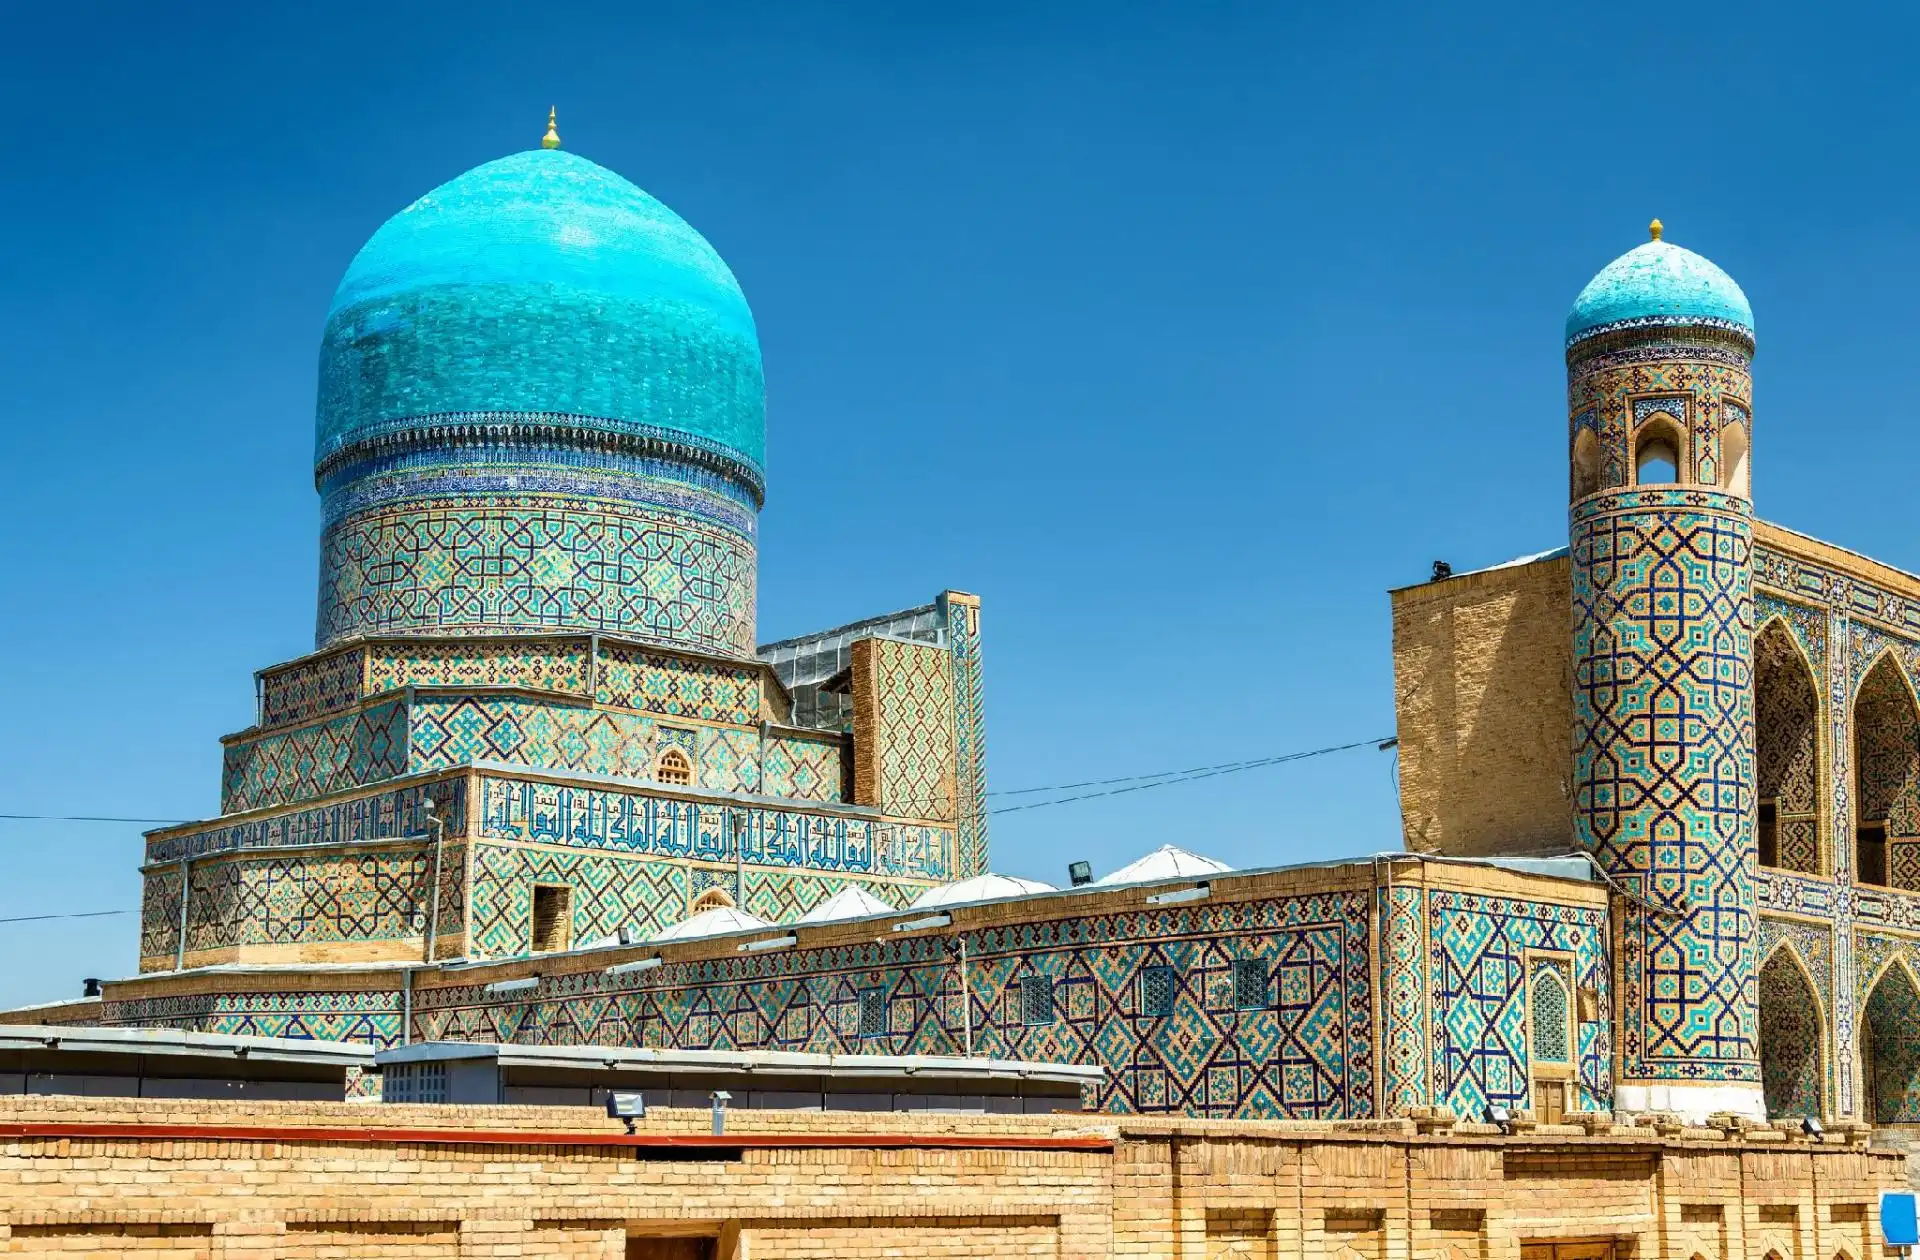 Uzbekistan tourism